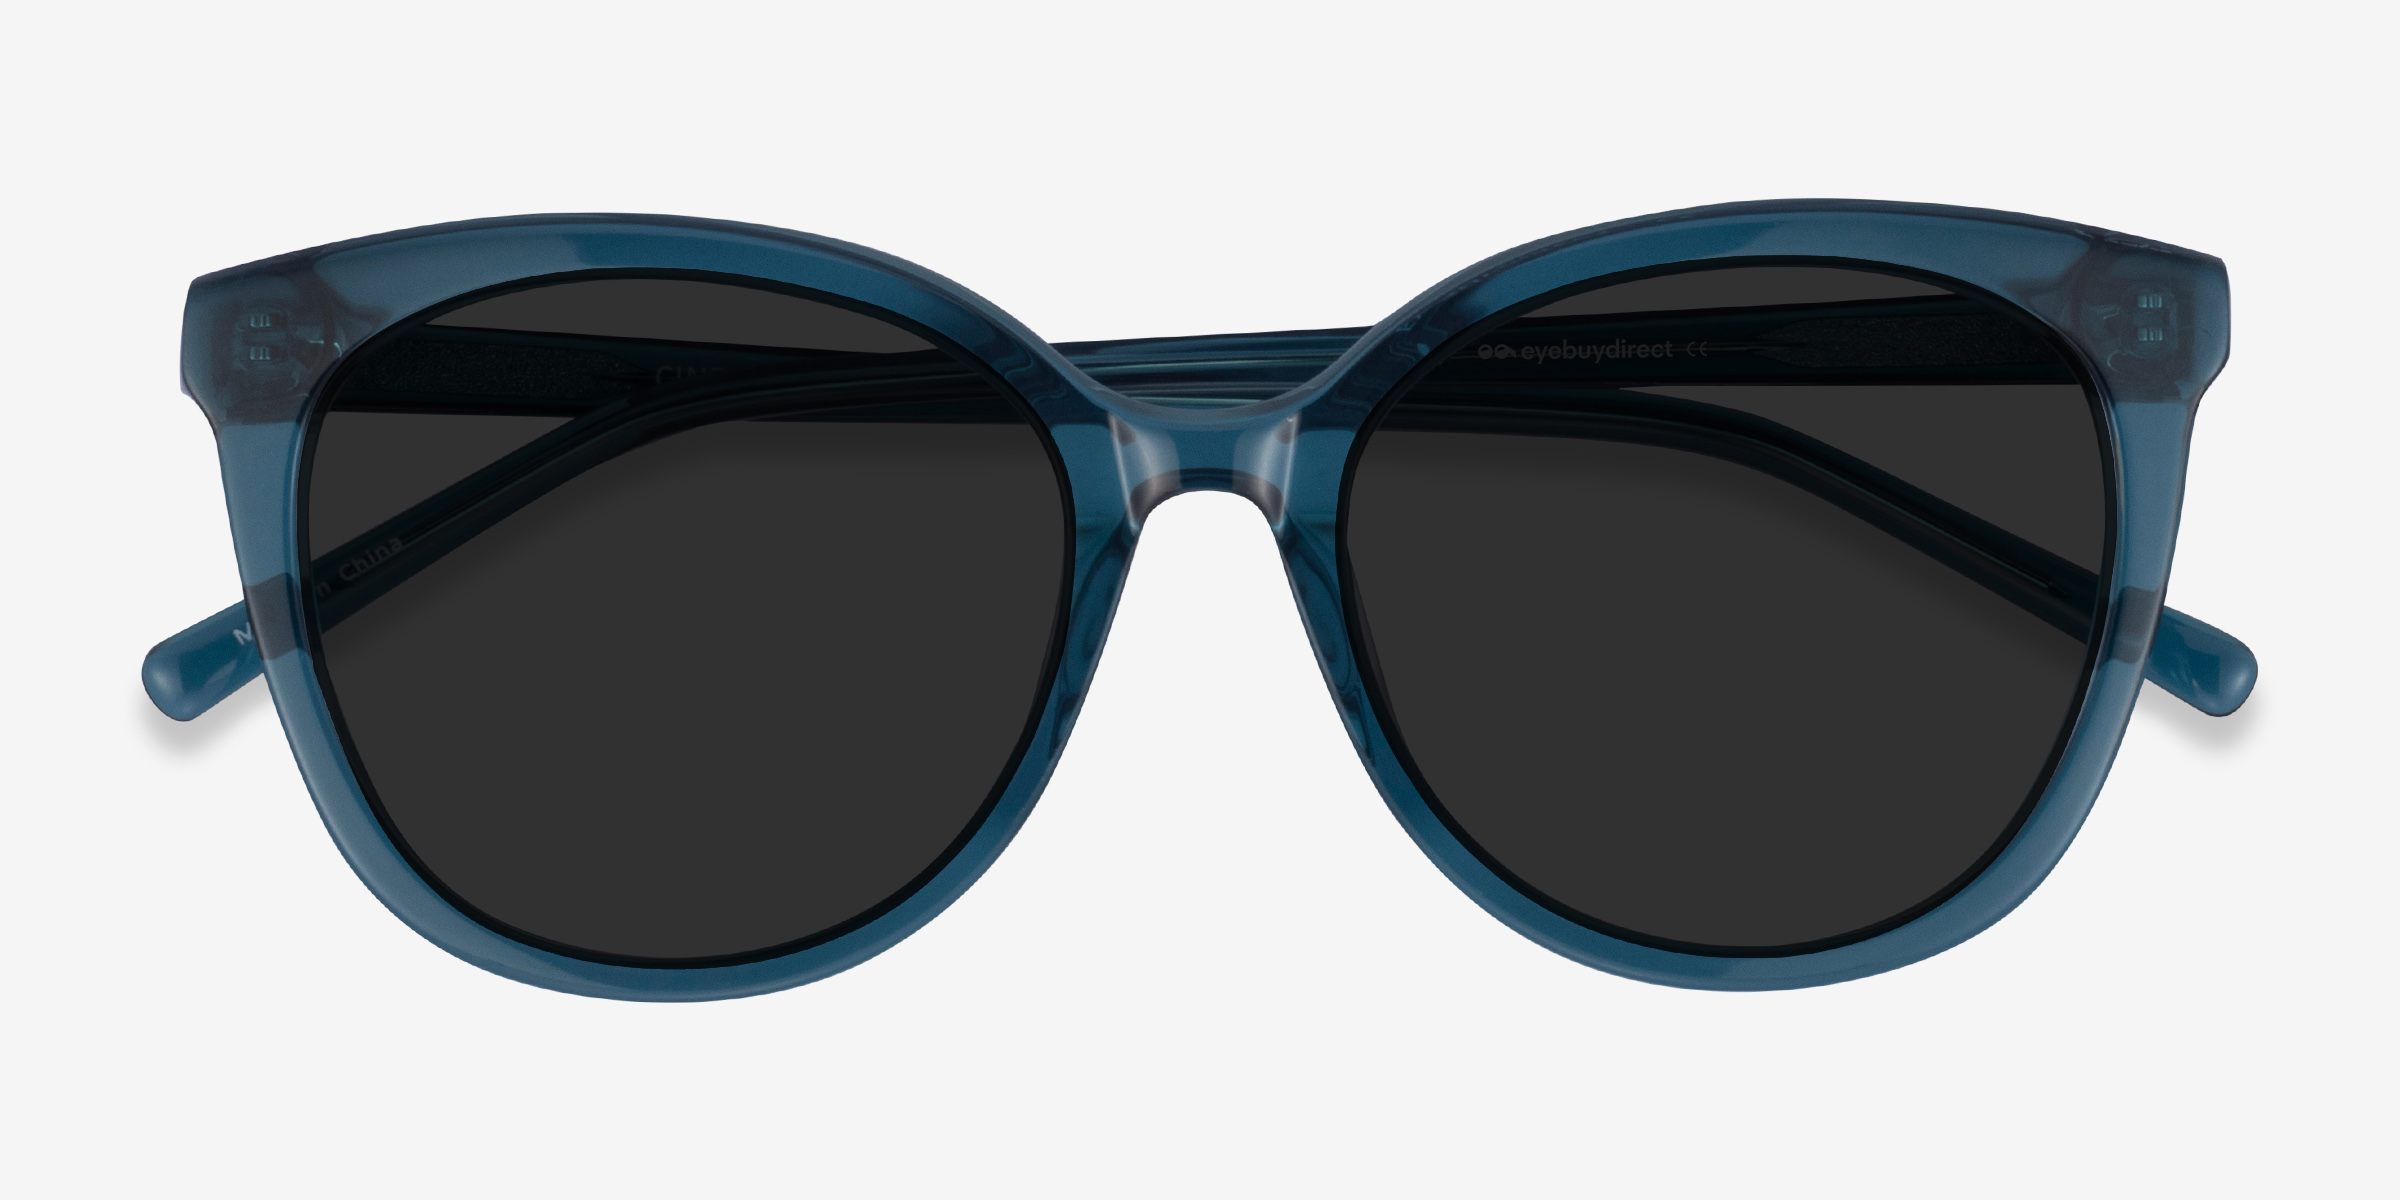 Cinematic - Cat Eye Clear Teal Frame Sunglasses For Women | Eyebuydirect